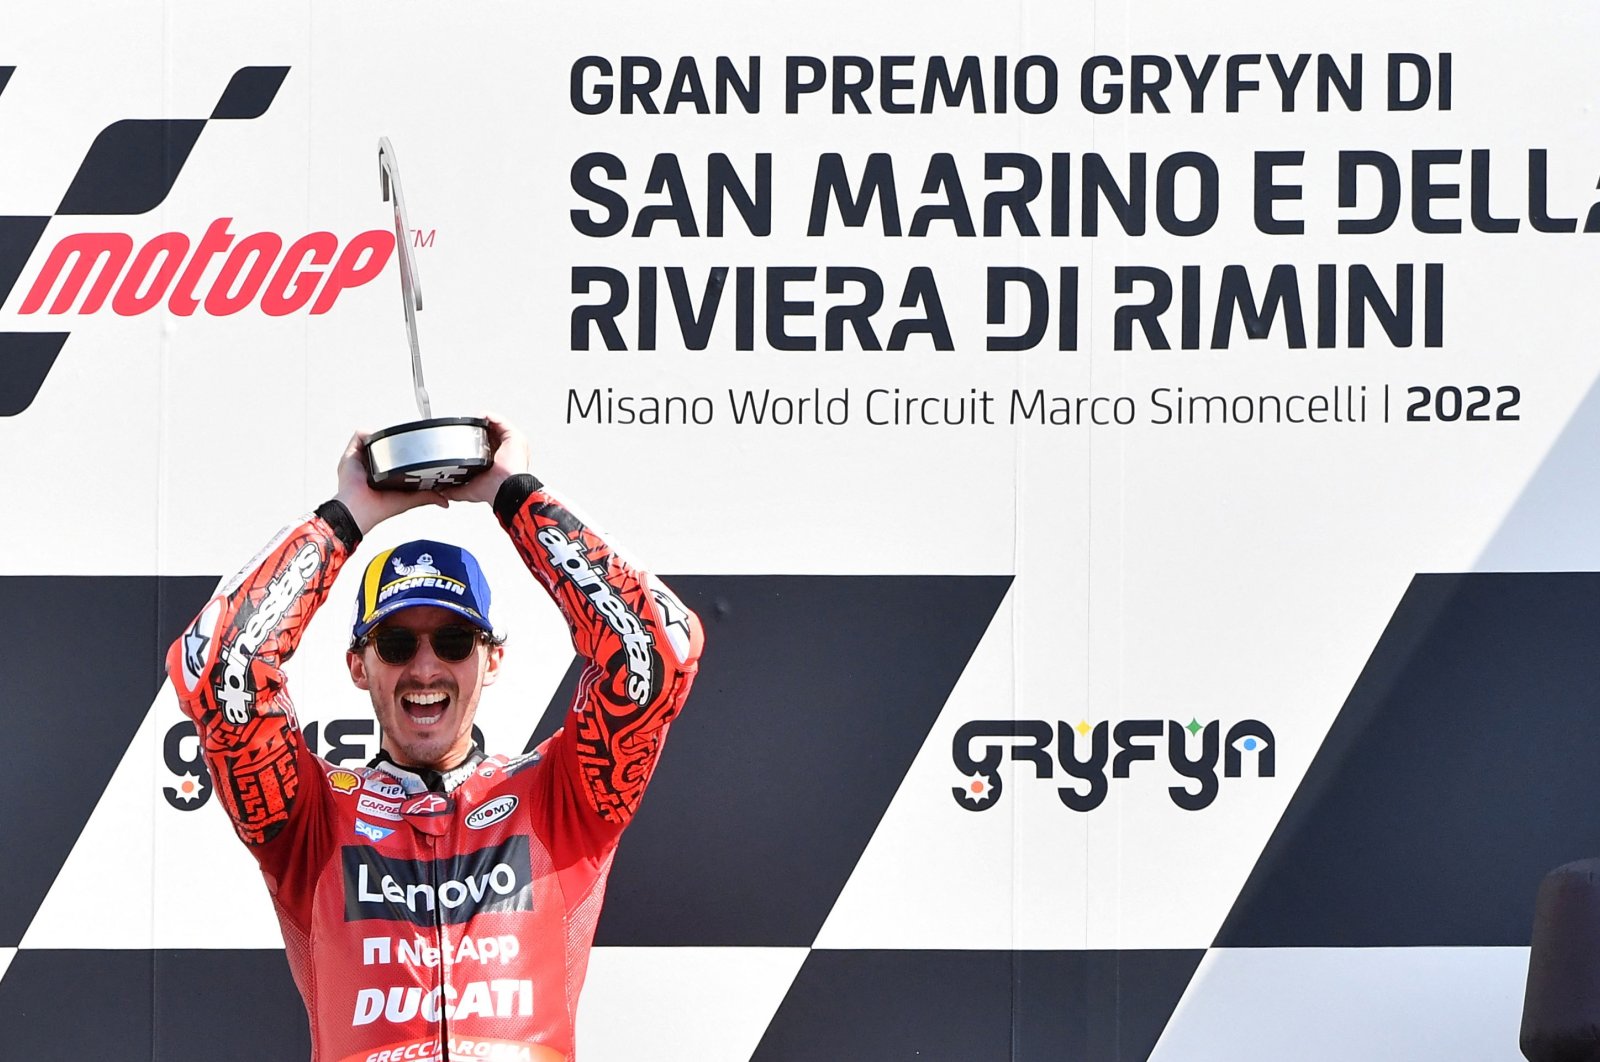 Bagnaia clinches 4th-straight victory to win San Marino GP